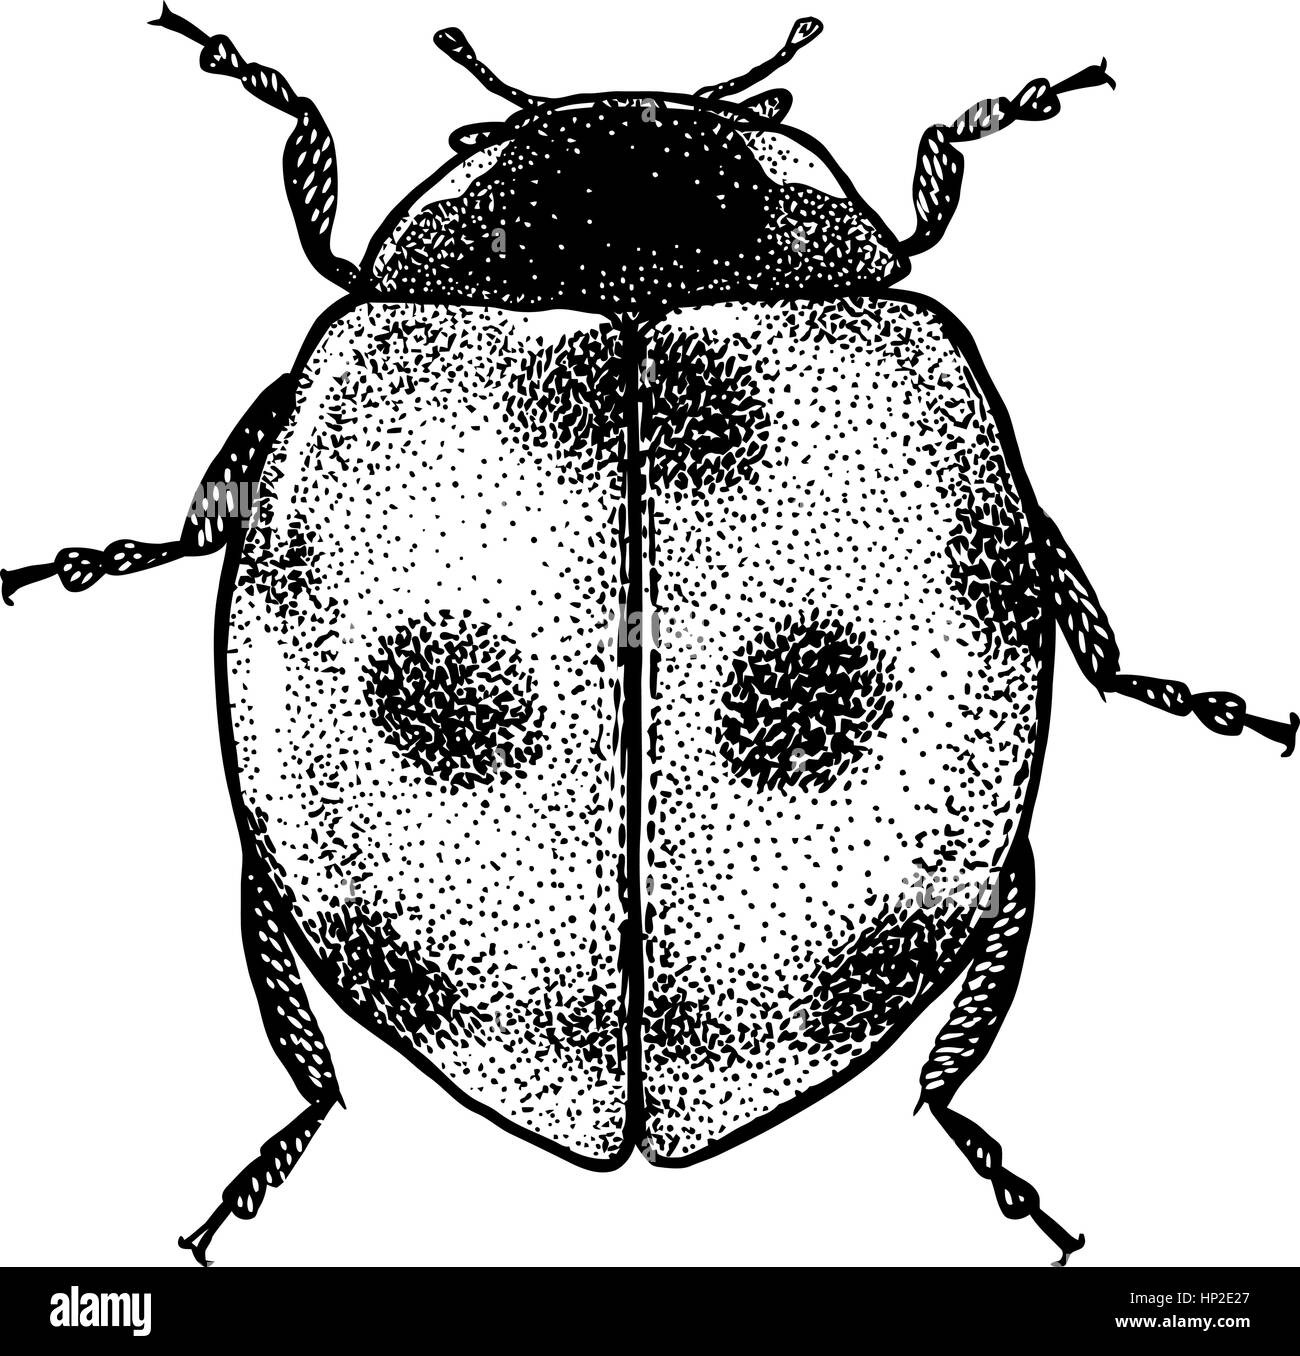 Insect Ladybug Coccinellidae Sketch Ladybug Ladybird Stock Illustration  2357276117 | Shutterstock